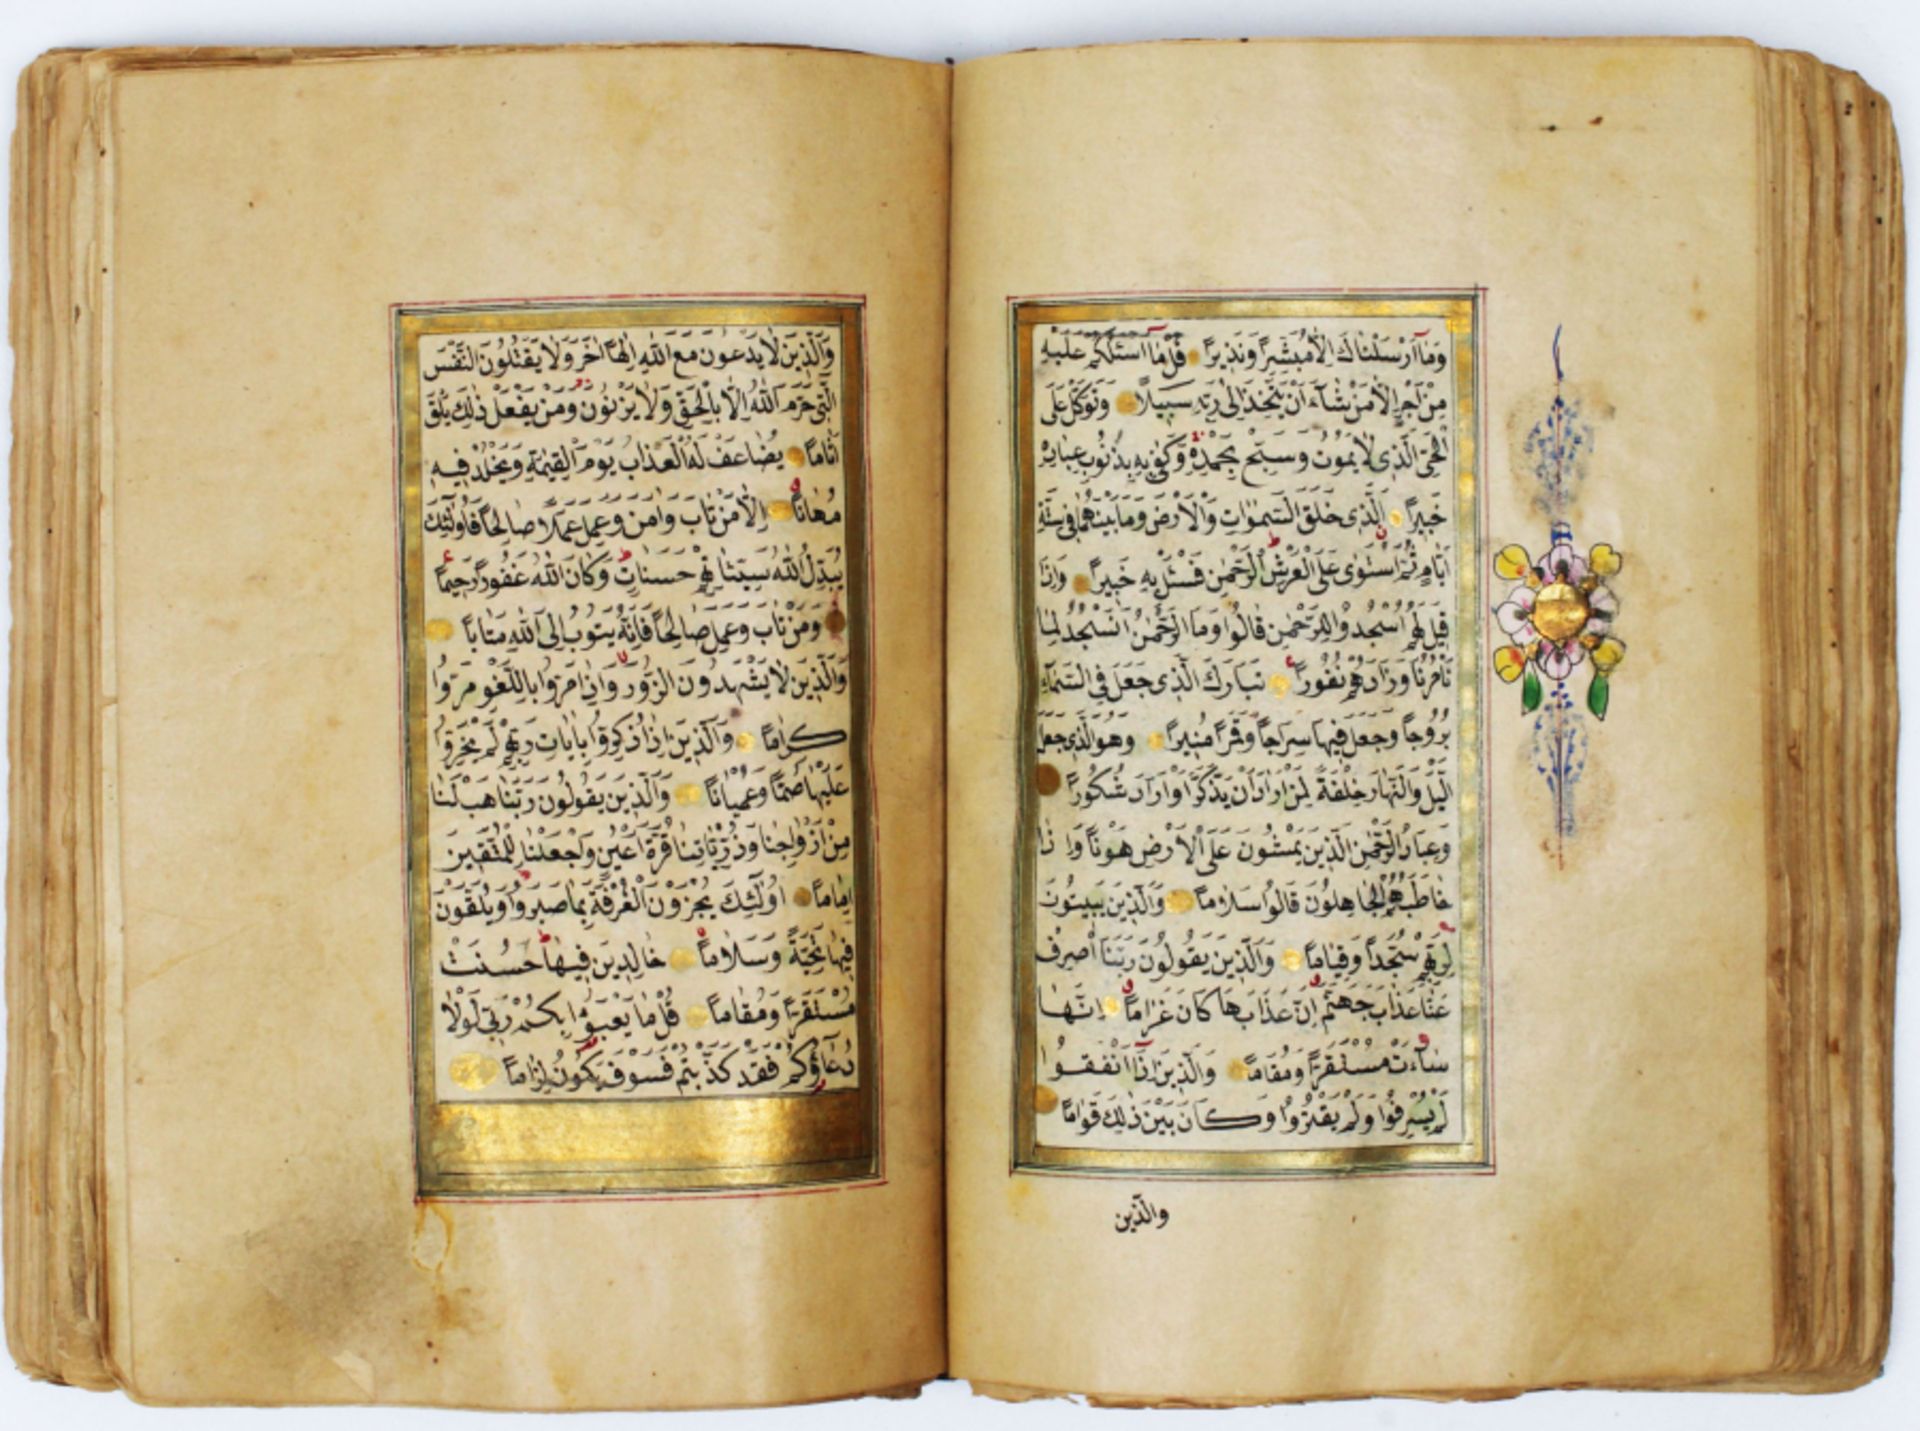 18th/19th century handwritten Ottoman Quran - Image 8 of 16